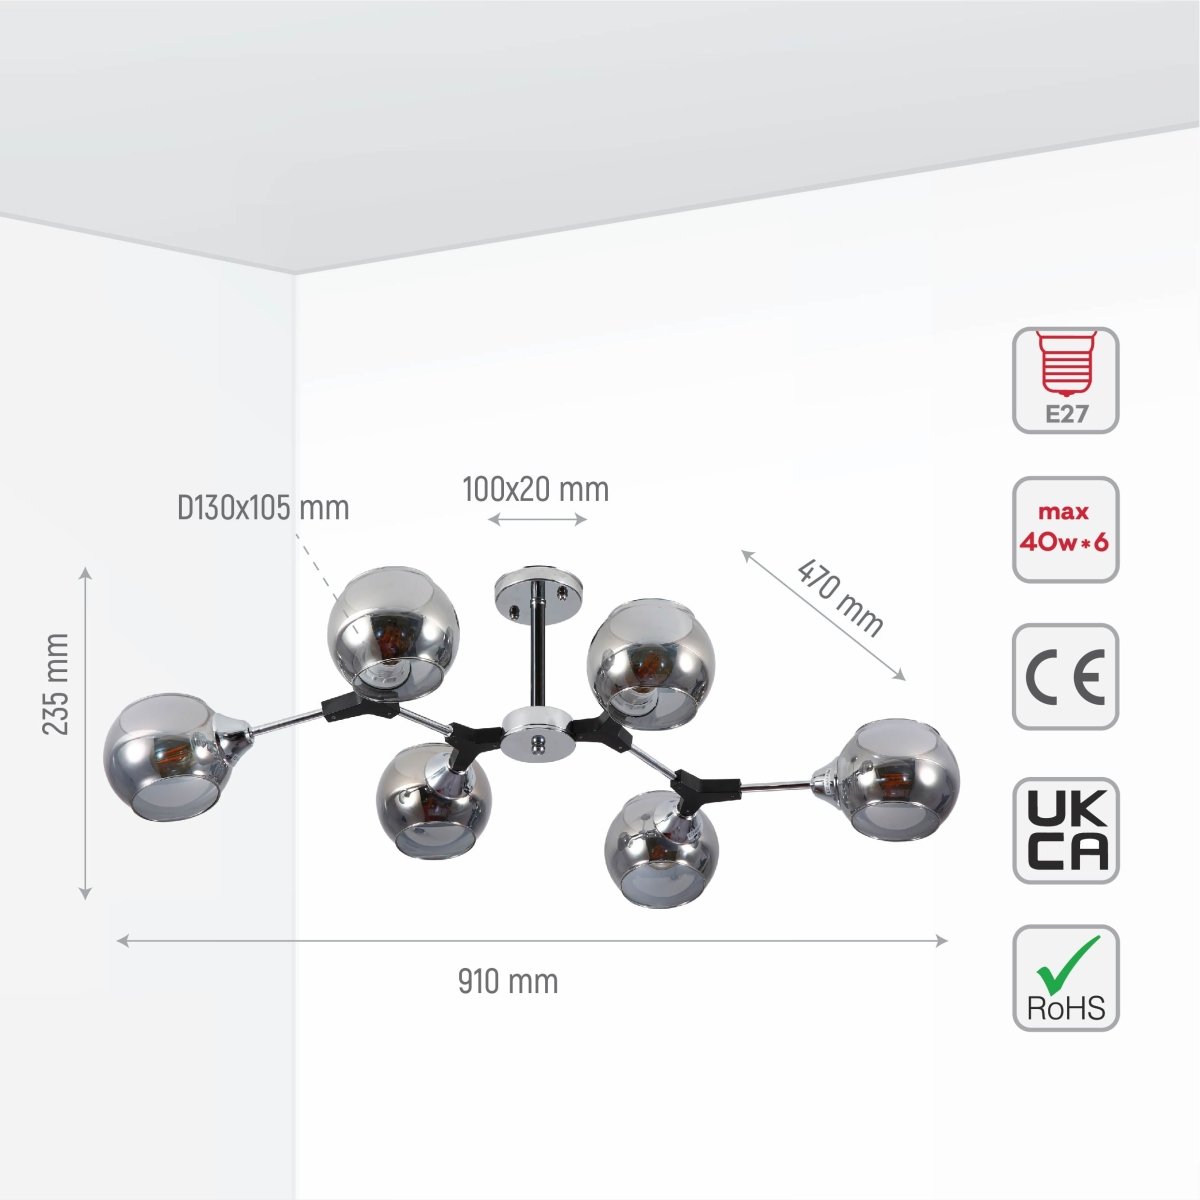 Size and specs of Smoky Barrel Glass Chrome Metal Body Sputnik Modern Ceiling Light with E27 Fittings | TEKLED 159-17696